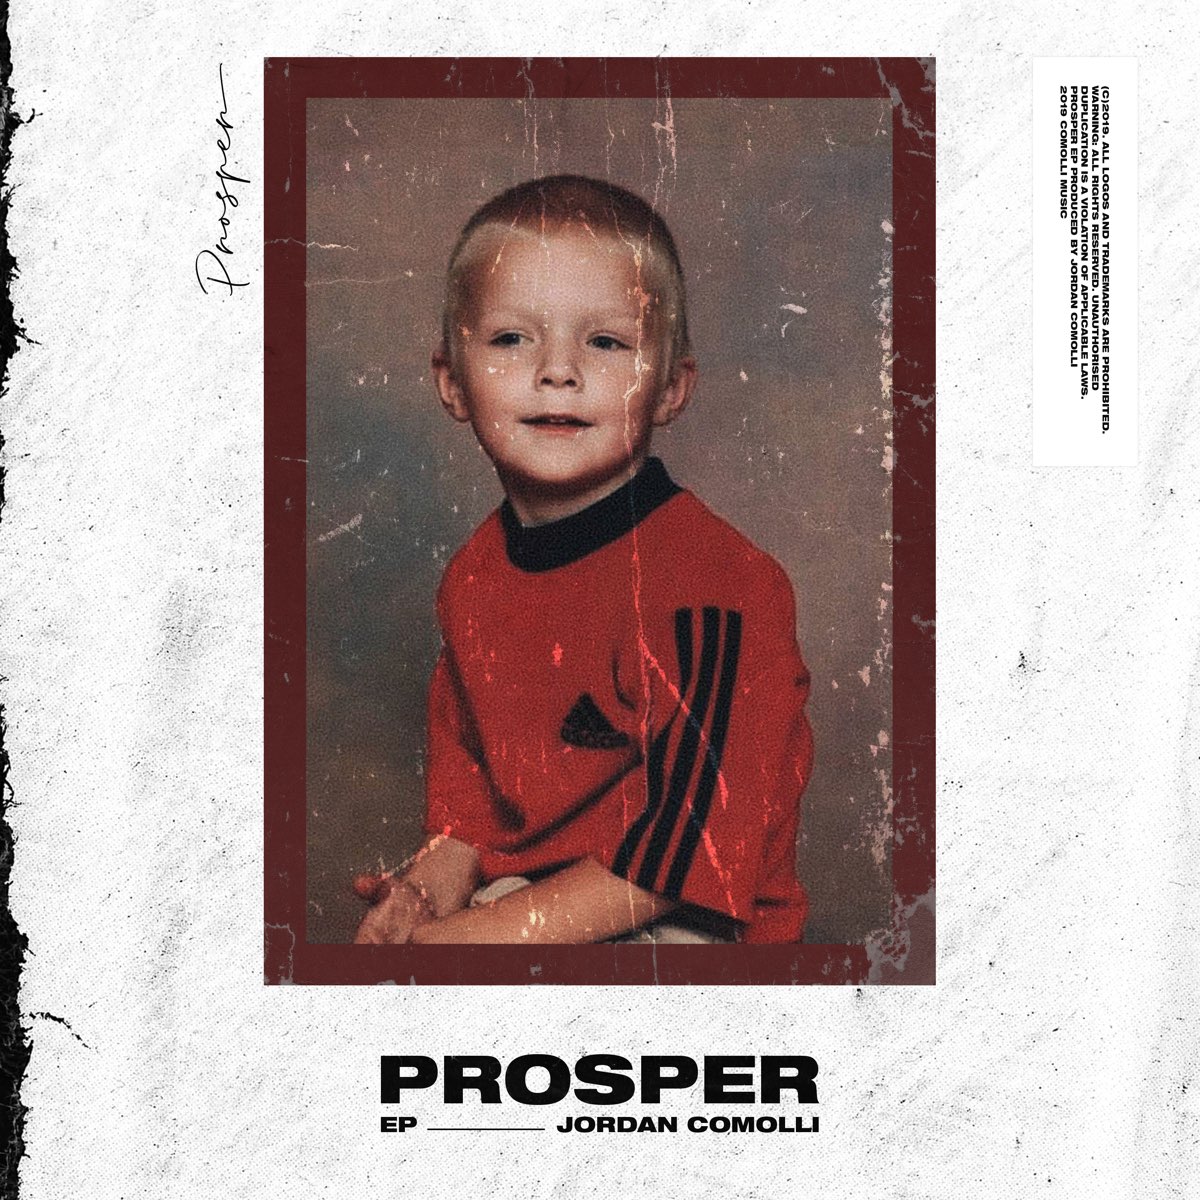 Reskyd kjole Frø Prosper - EP by Jordan Comolli on Apple Music